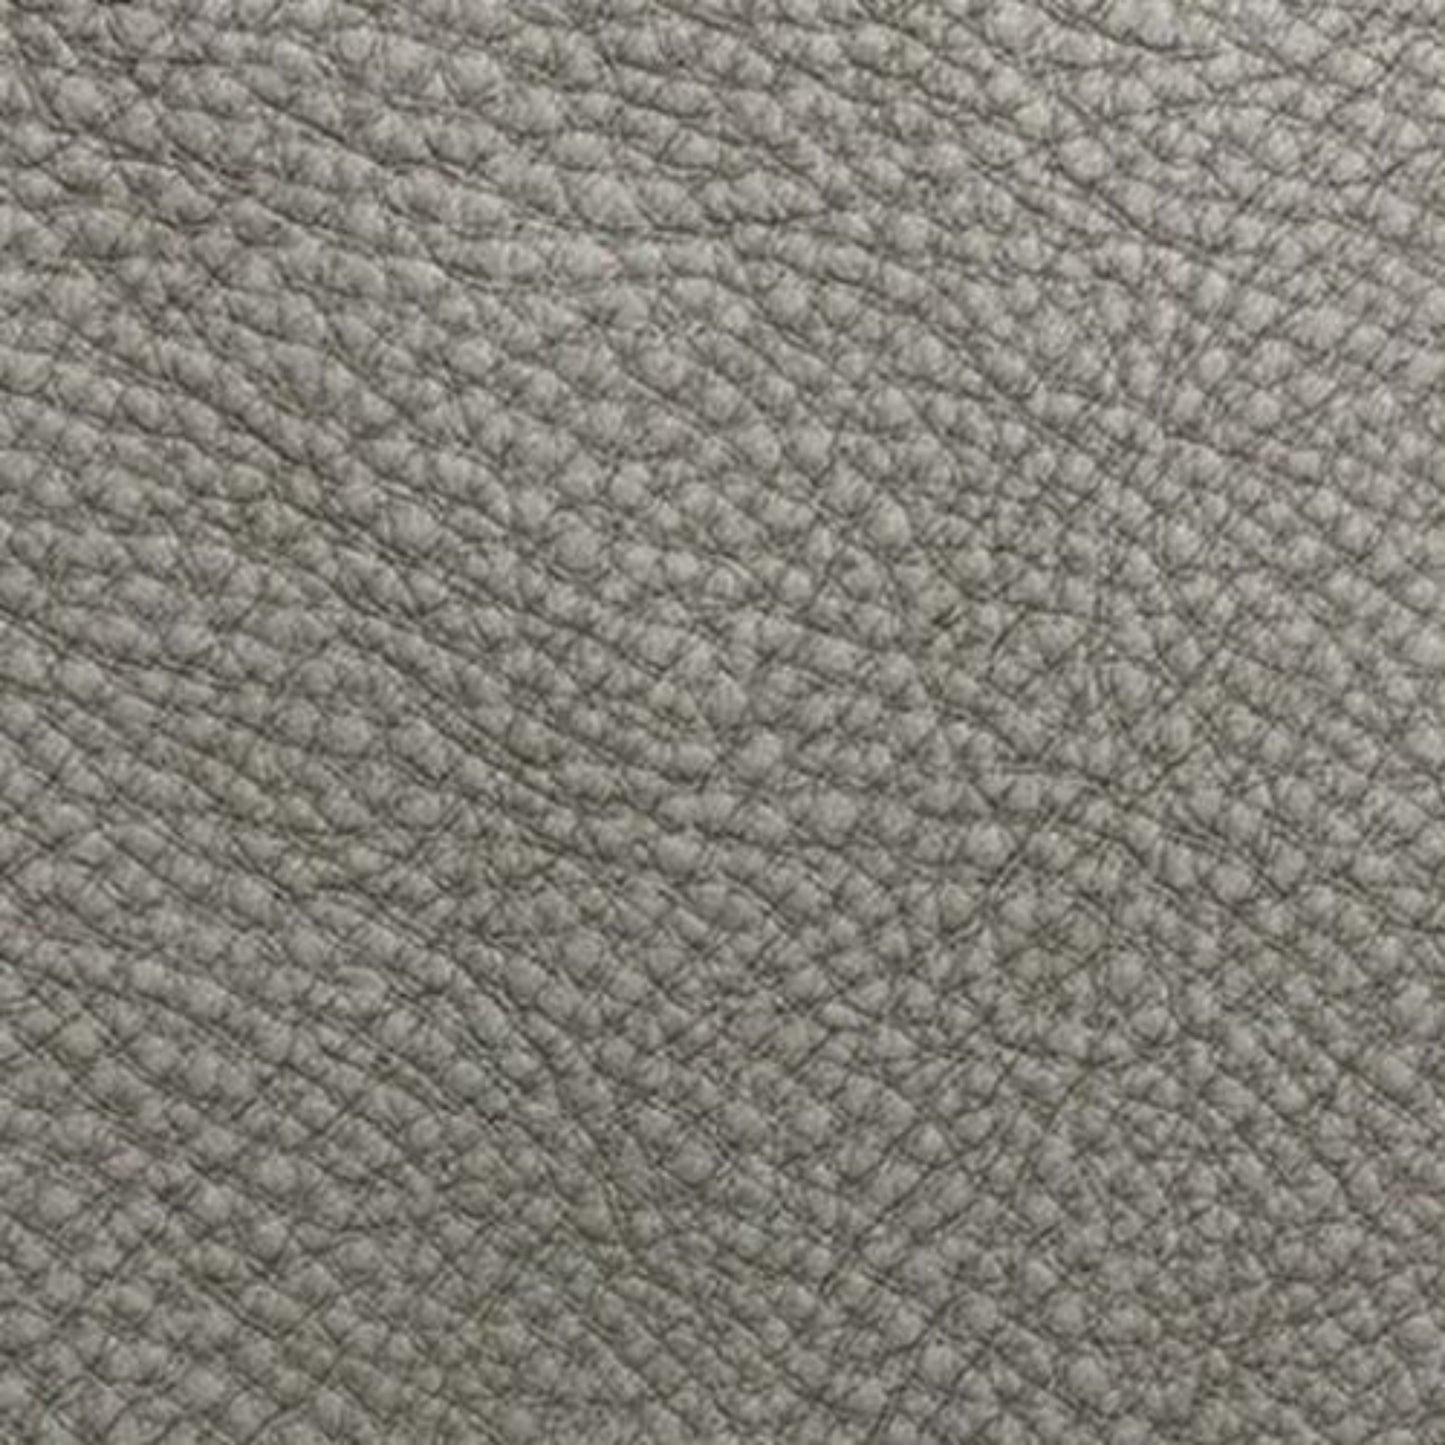 Calm grey top grain full leather sofa